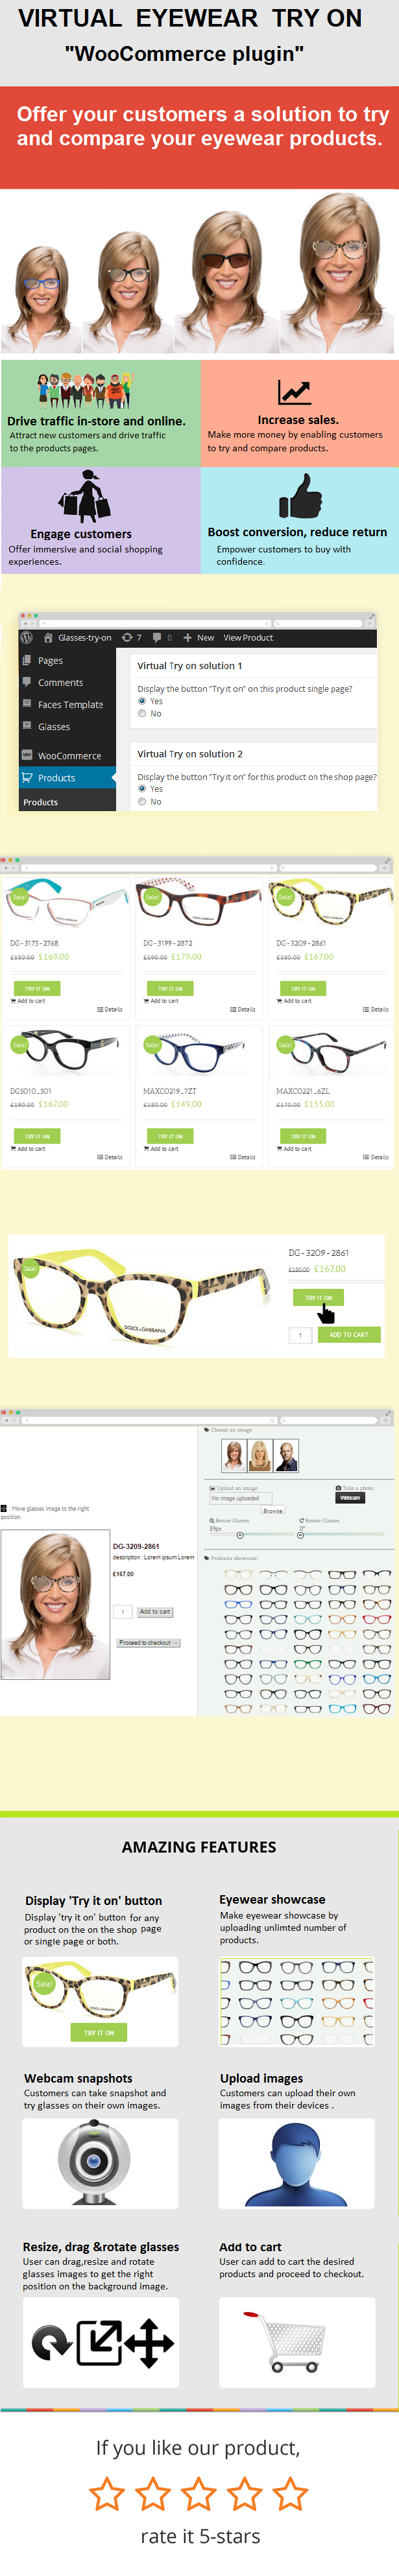 Eyewear Virtual Try-on "WooCommerce plugin" - 1